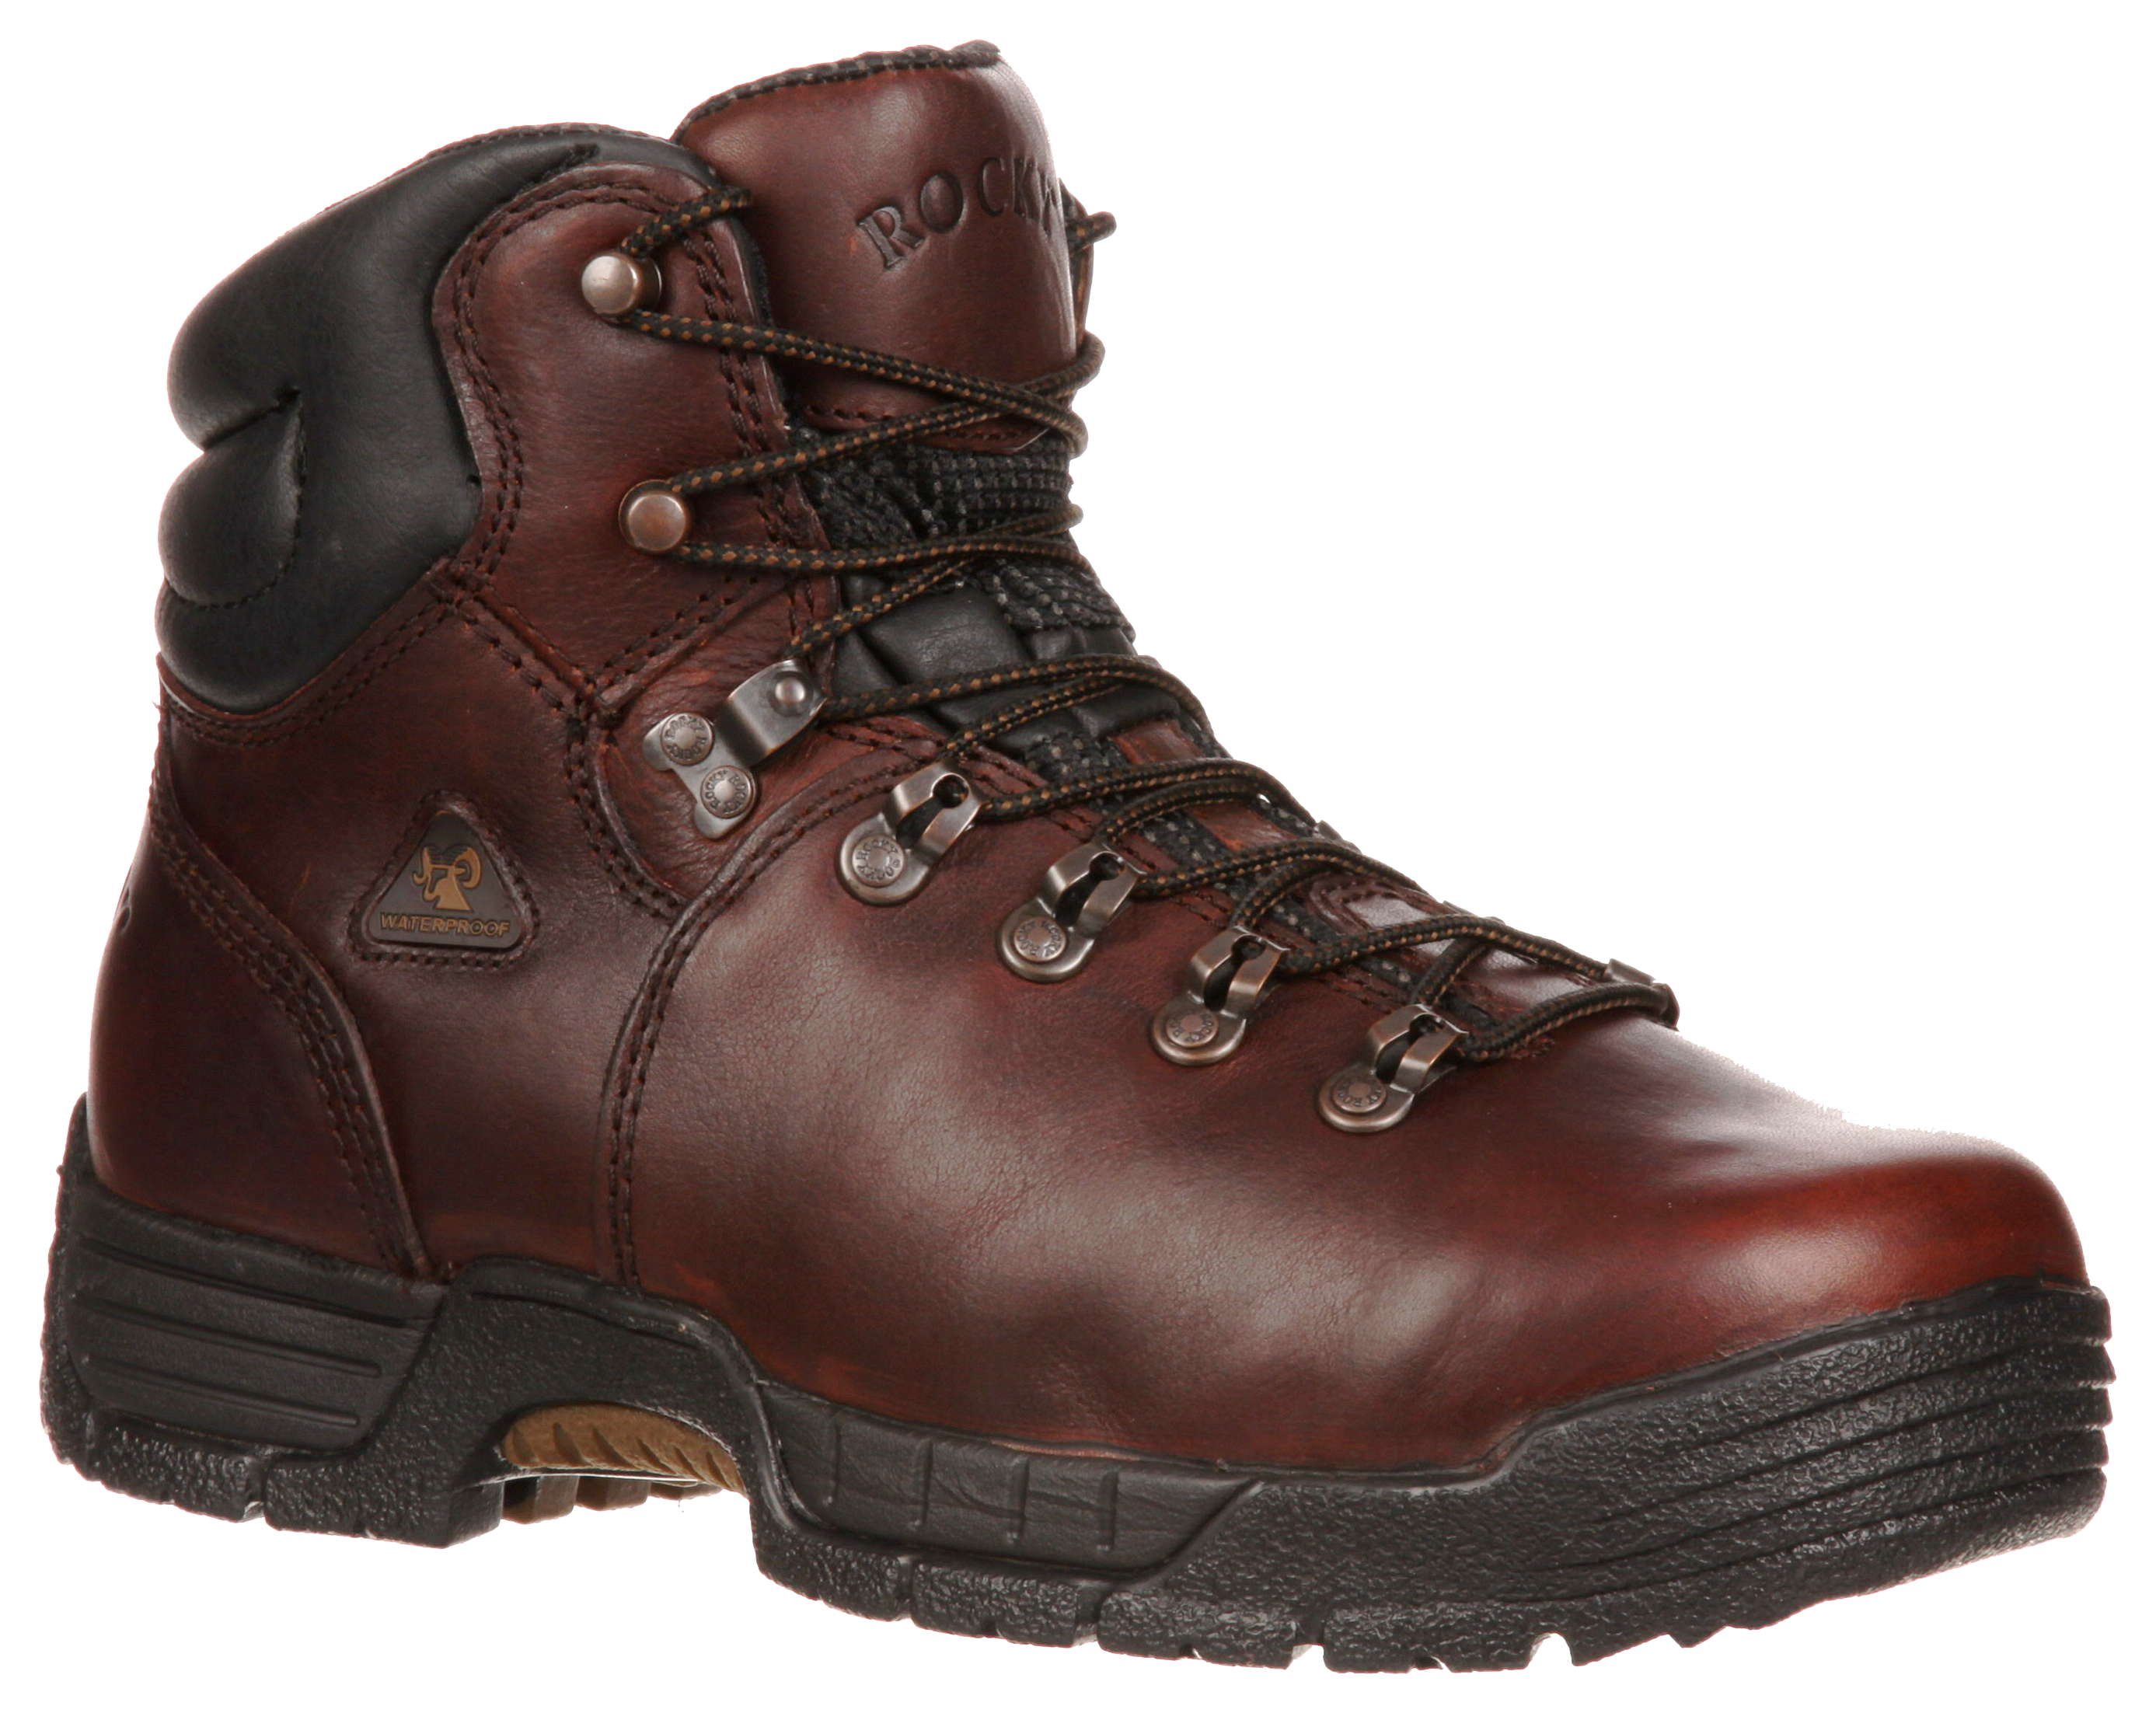 ROCKY MobiLite Waterproof Steel Toe Work Boots for Men - Brown - 11.5 M